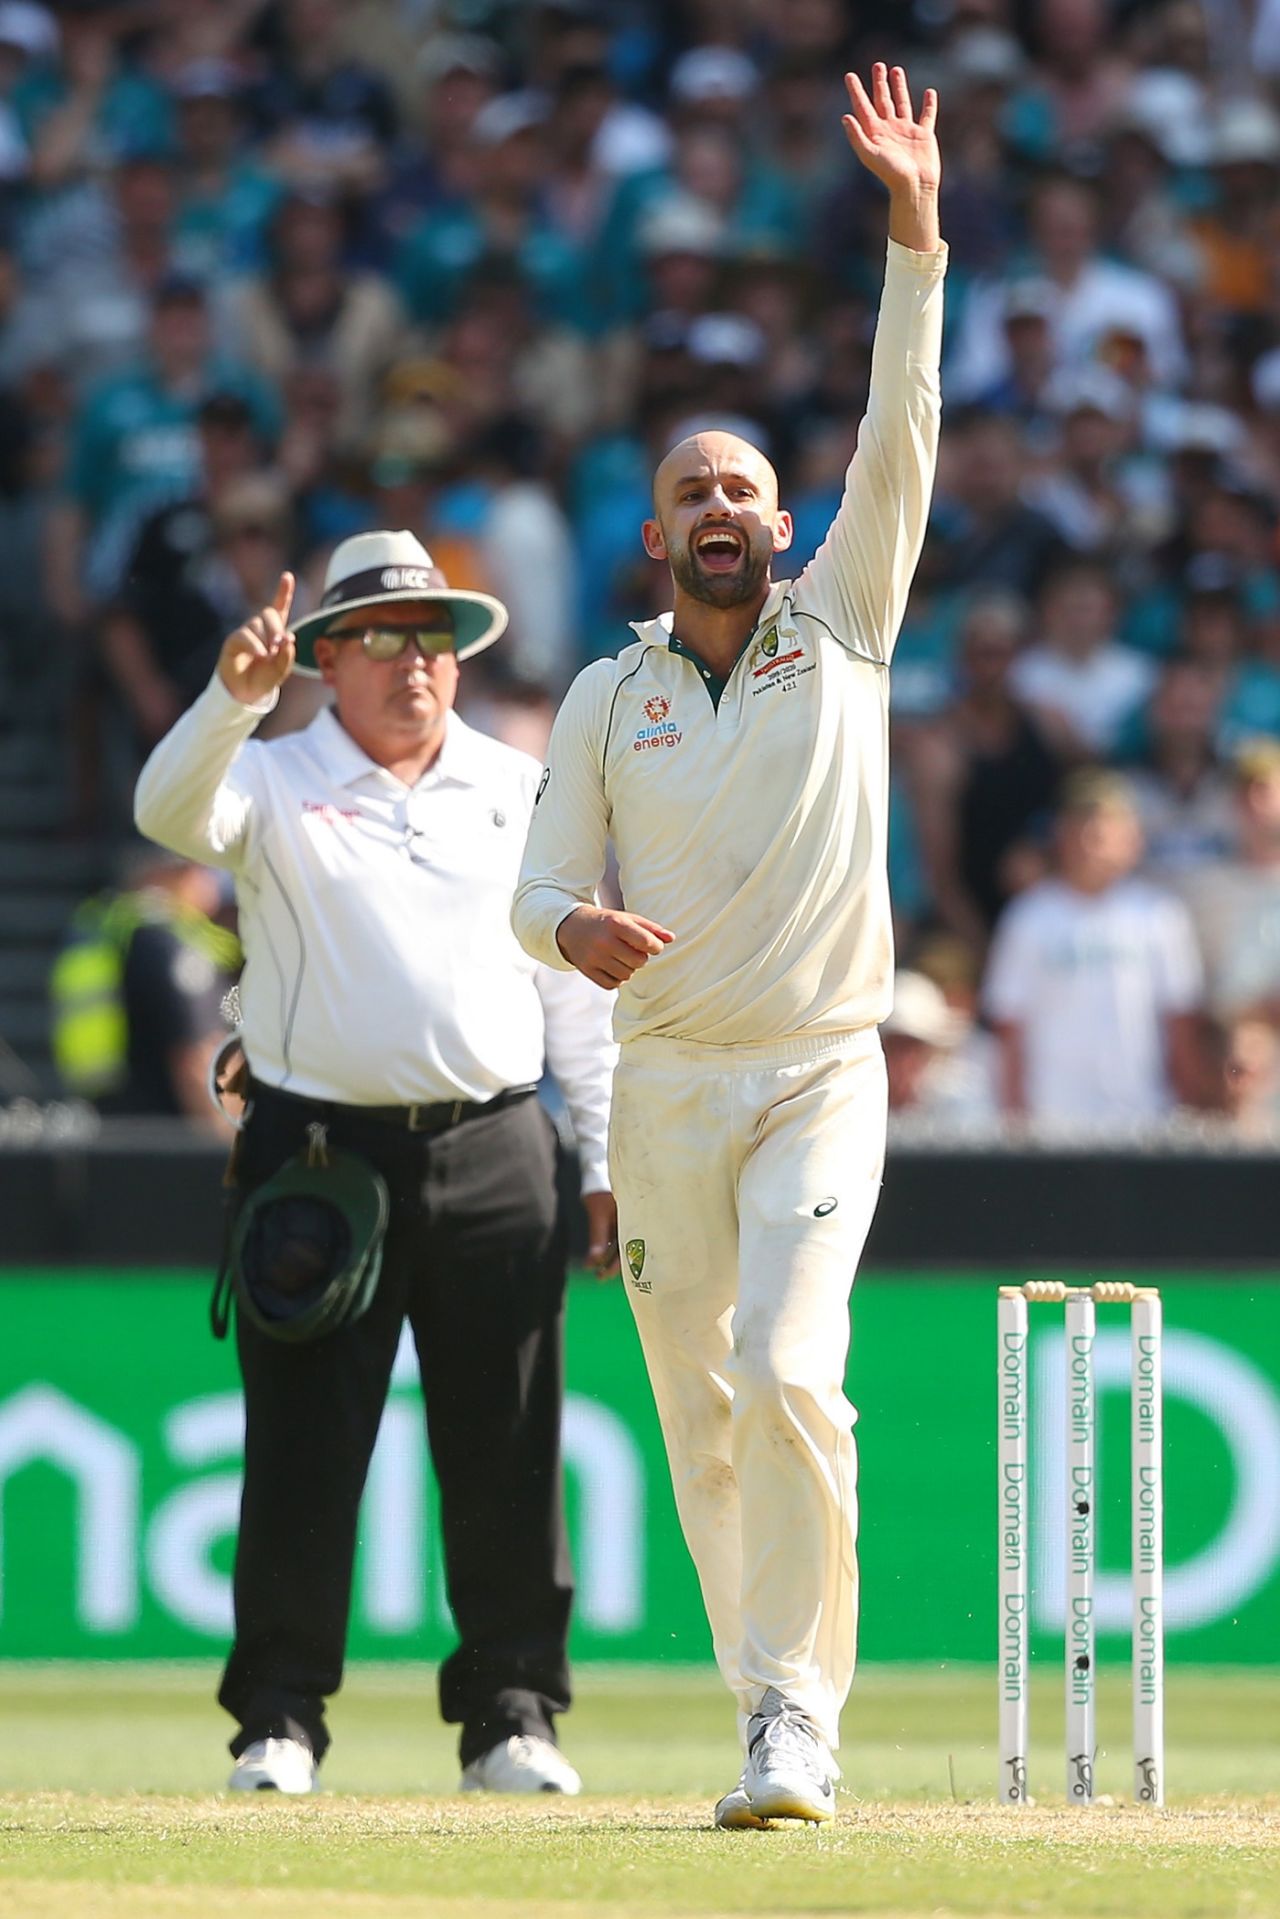 Nathan Lyon celebrates a wicket, Australia v New Zealand, 2nd Test, Melbourne, Day 4, December 29, 2019